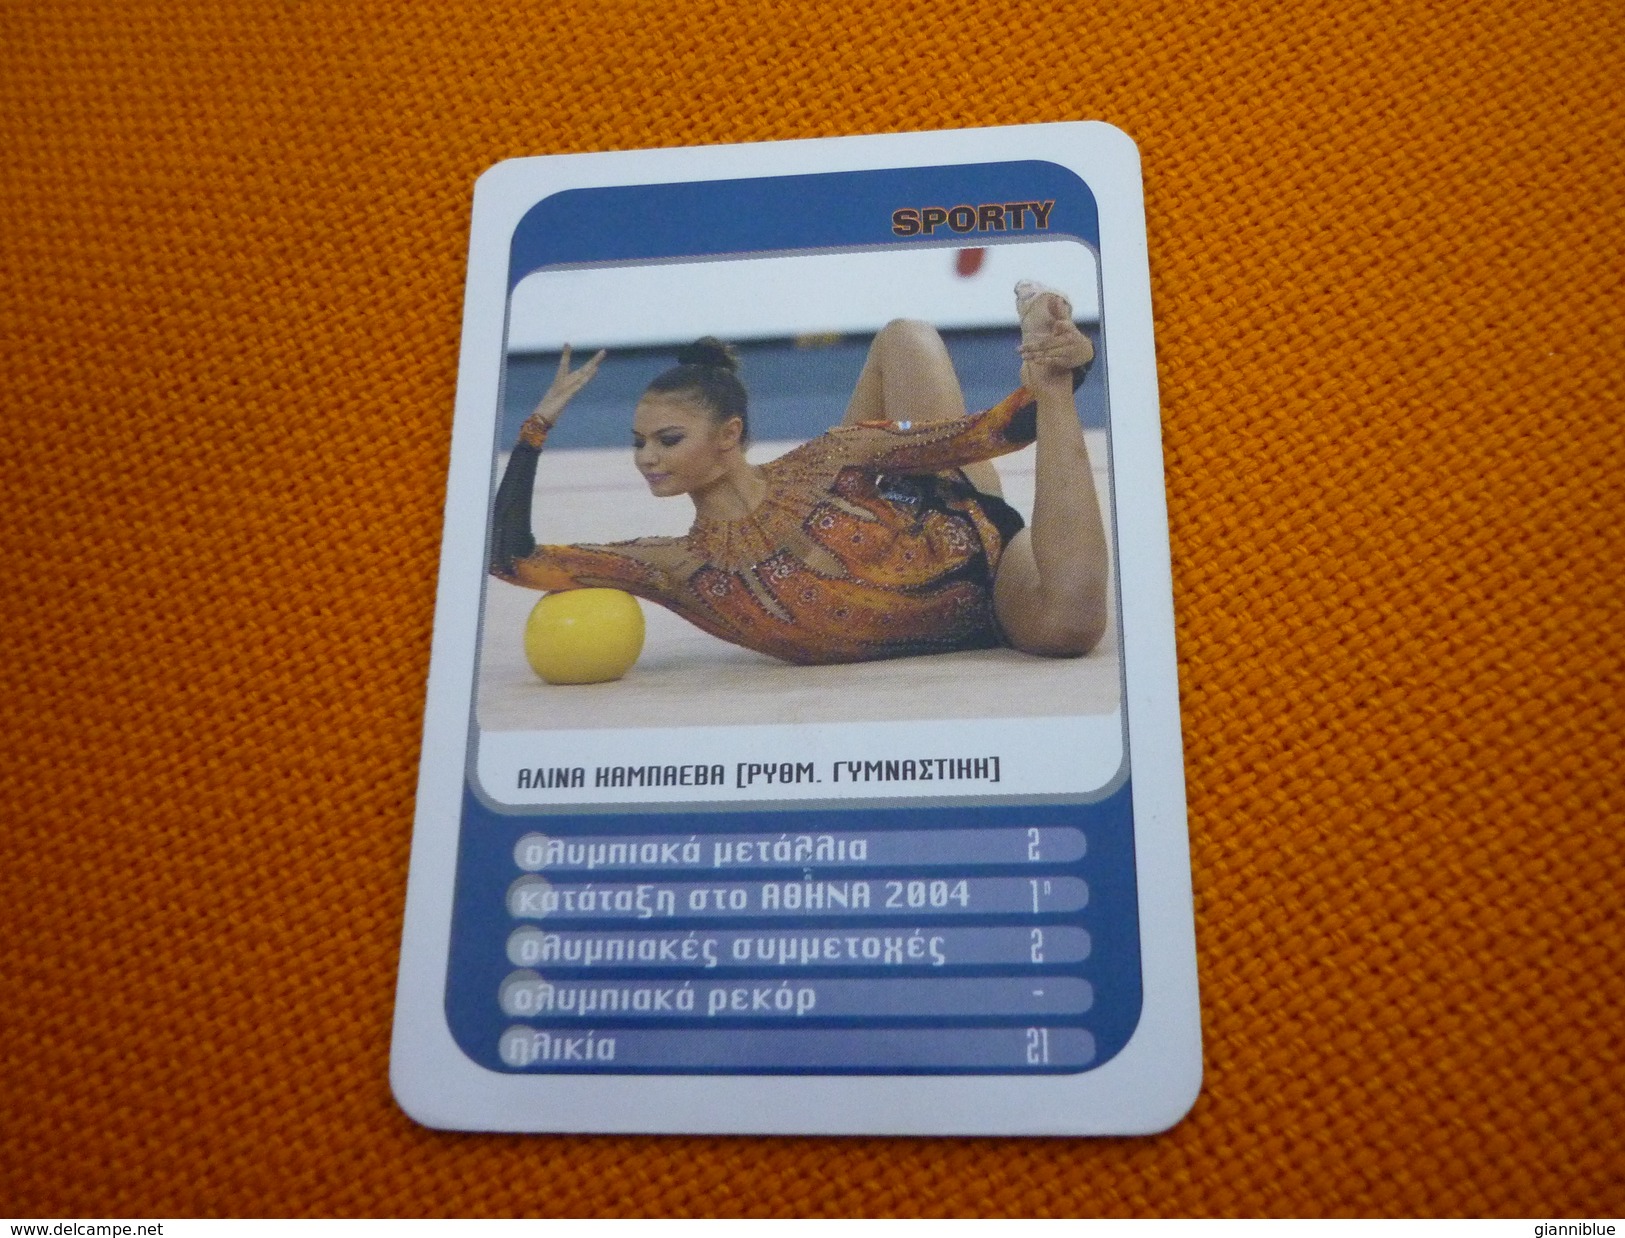 Alina Kabaeva Russian Rythmic Gymnast Gymnastics Athens 2004 Olympic Games Medalist Greece Greek Trading Card - Trading Cards